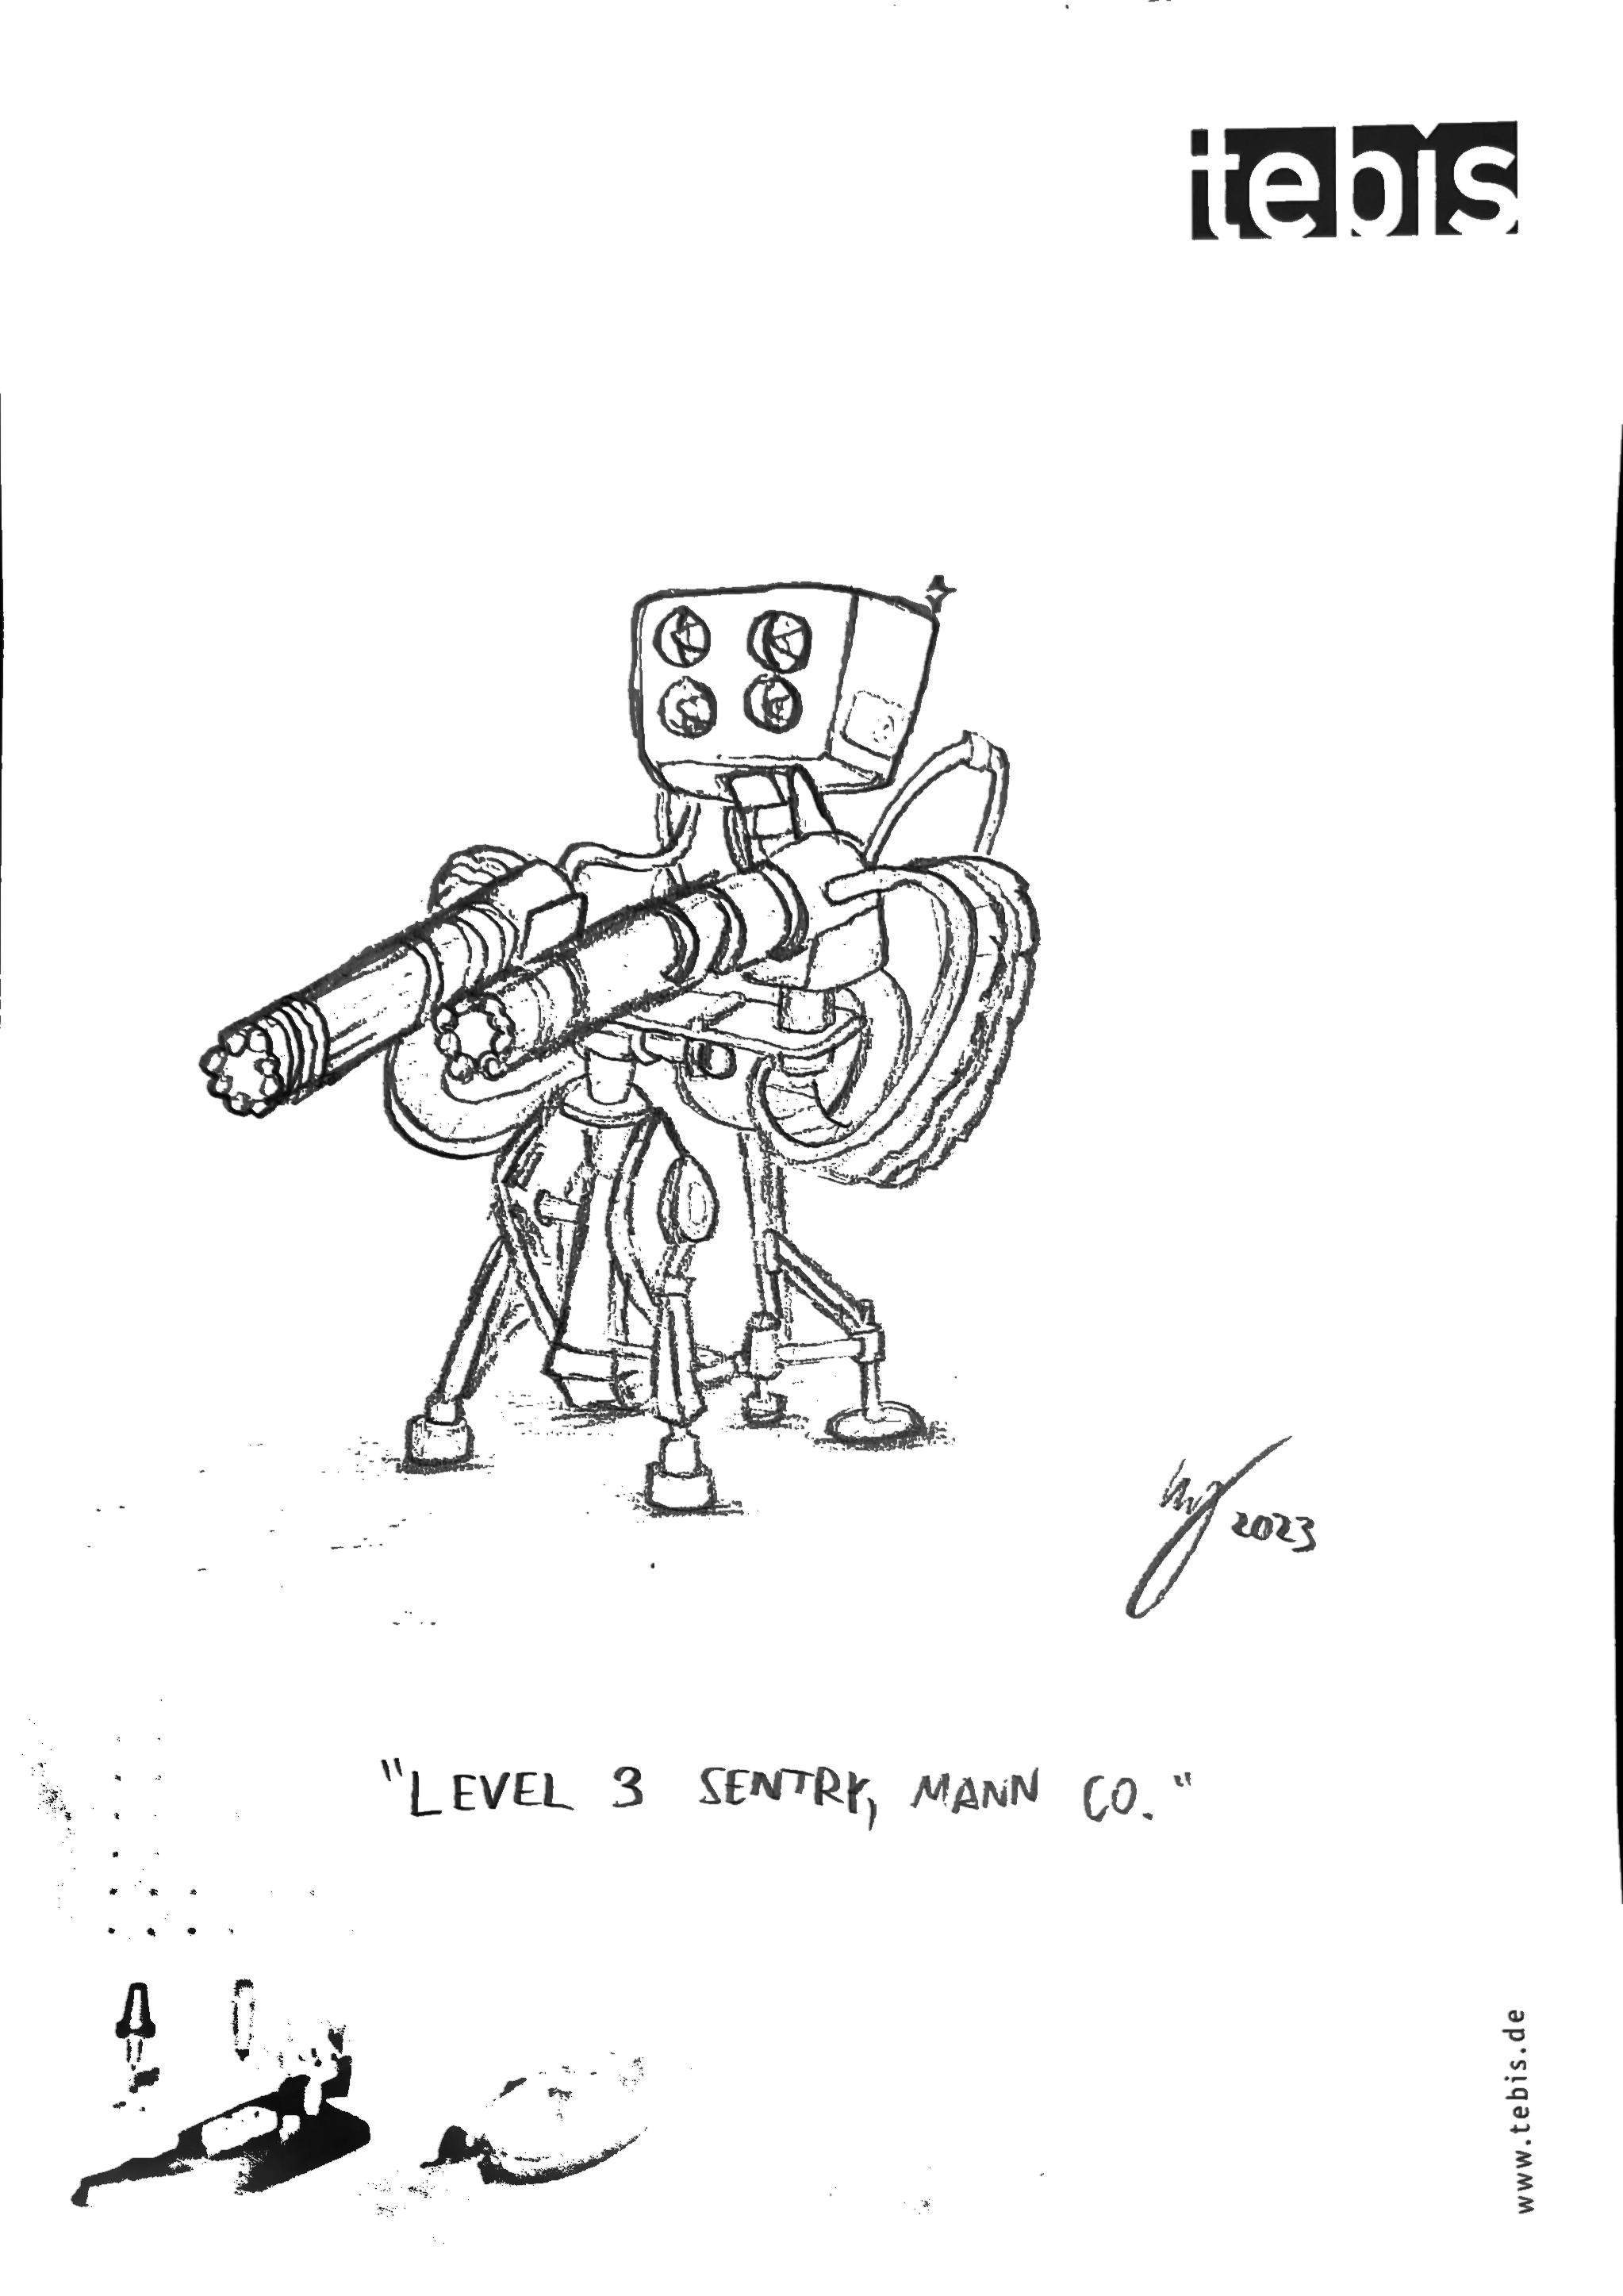 A level 3 sentry.